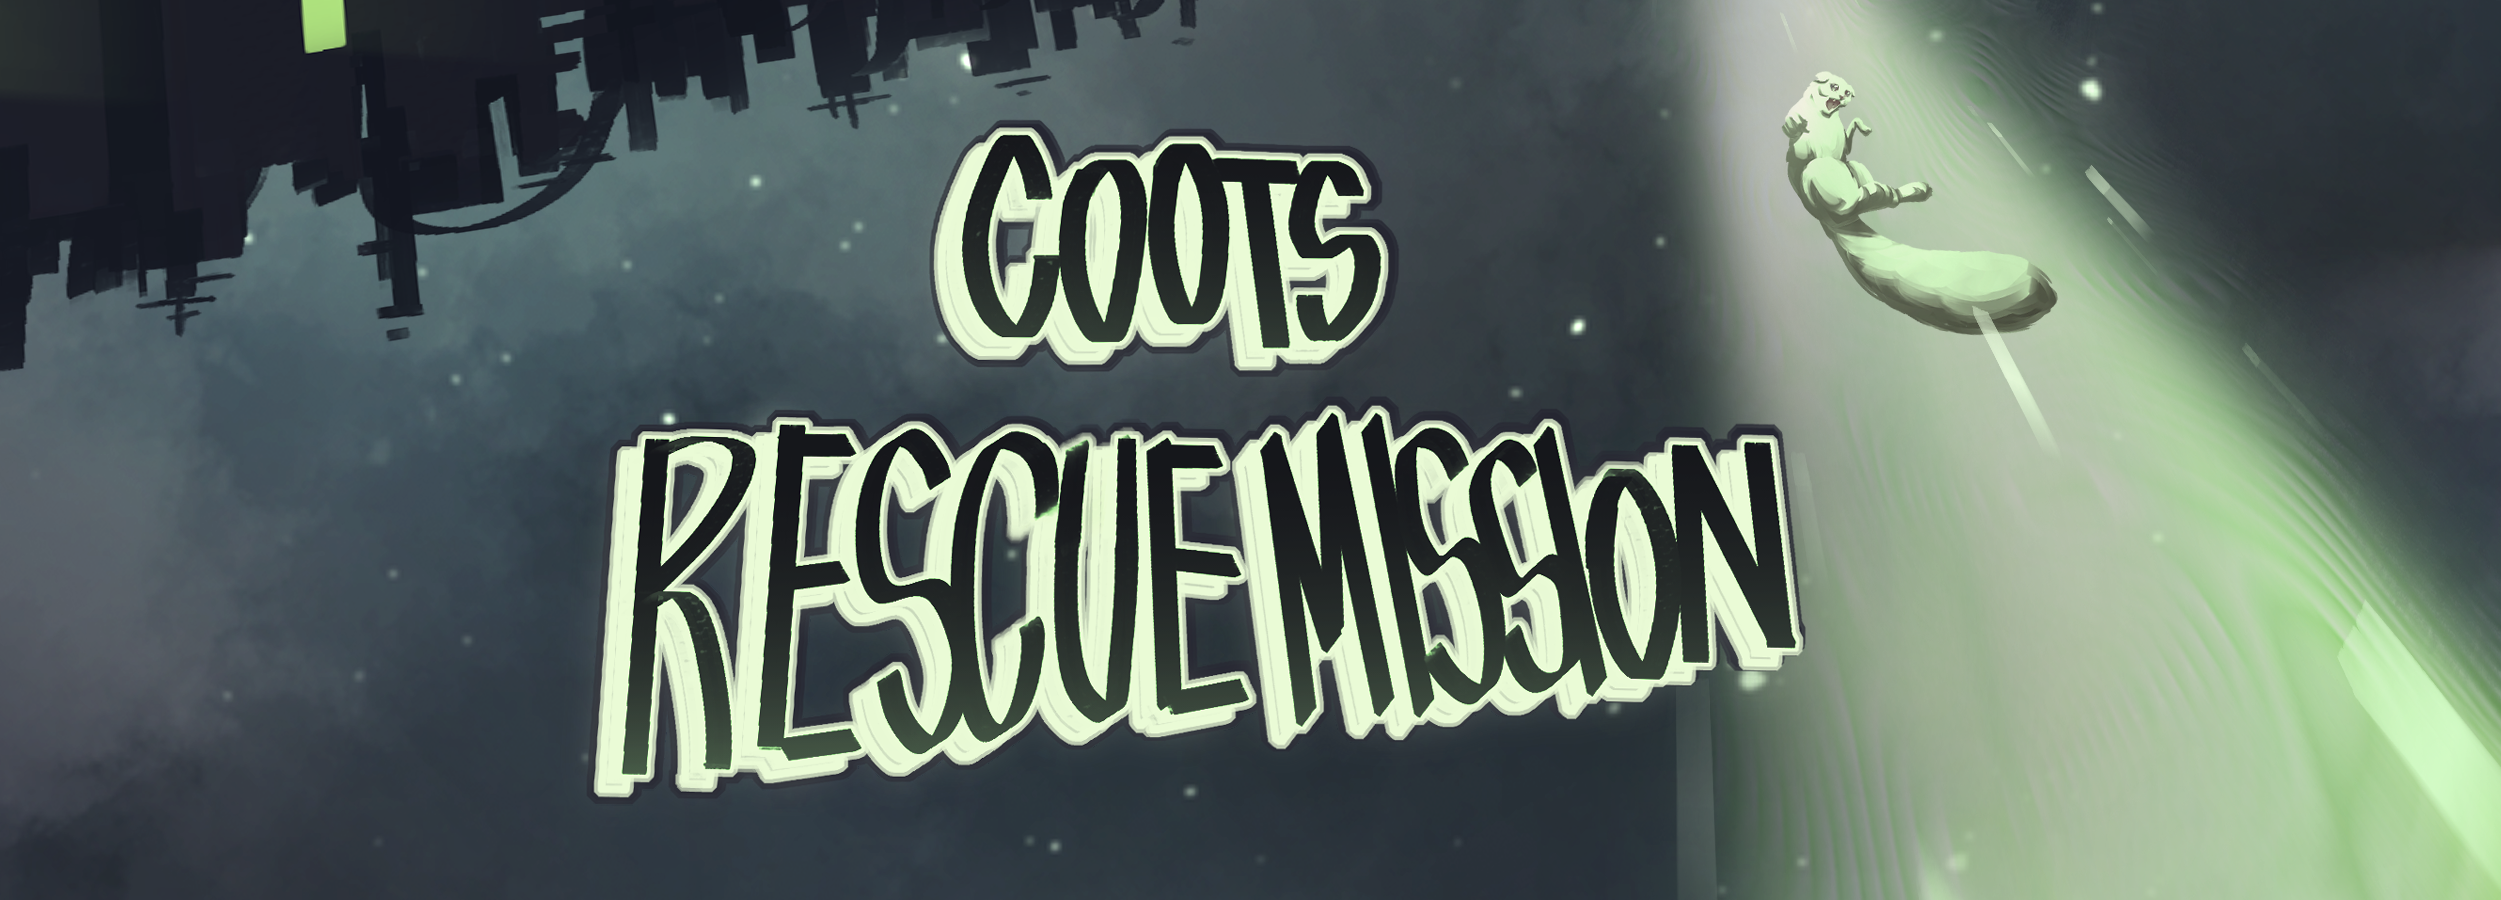 Coots Rescue Mission